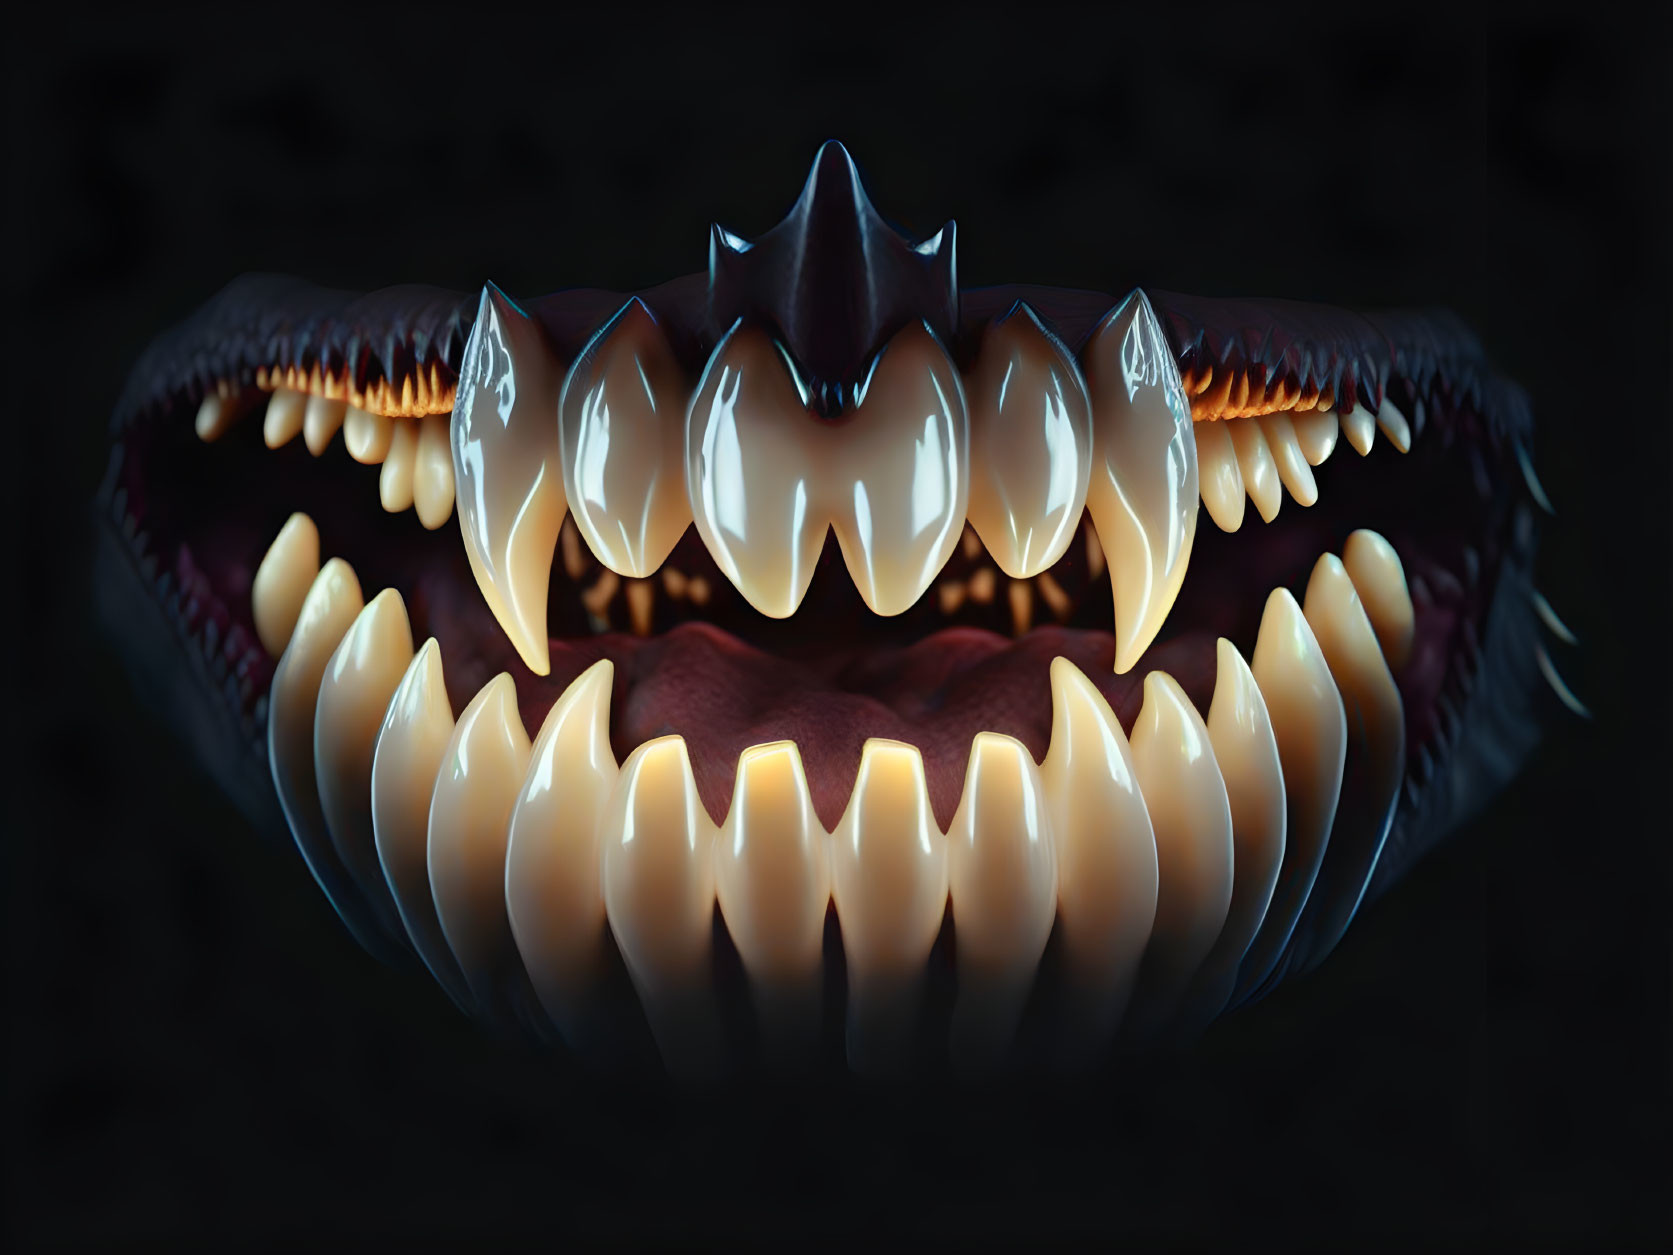 Fantastical creature with sharp, luminous teeth in dark gums